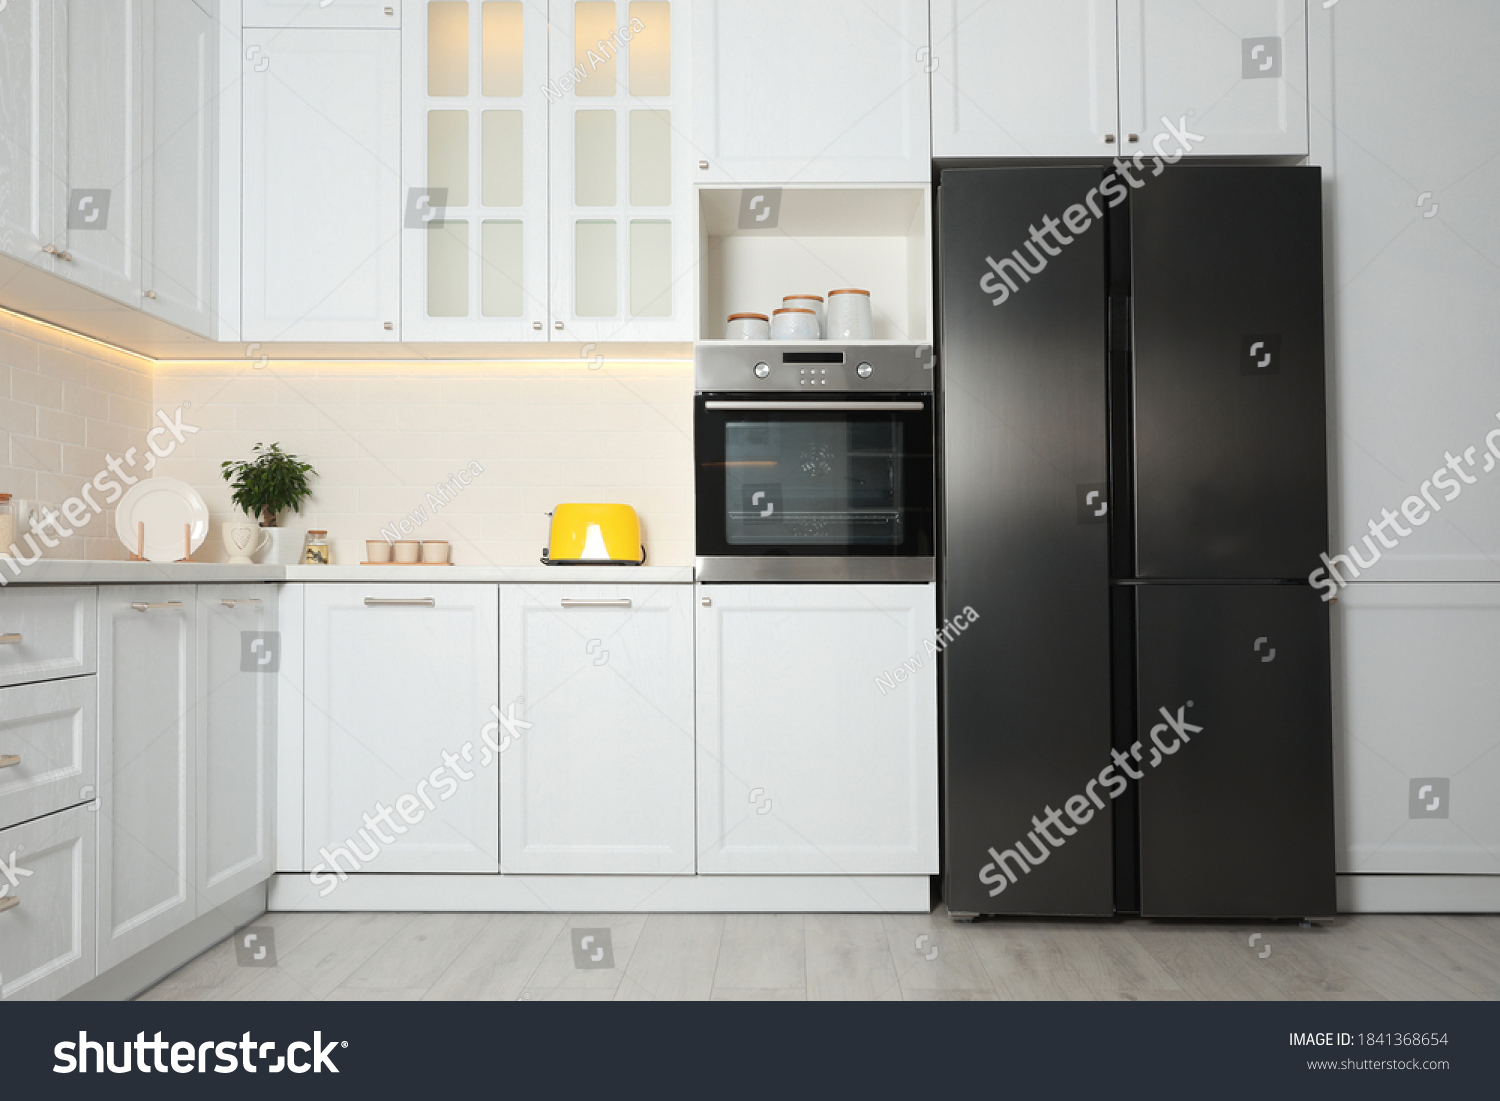 Stock Photo Stylish Kitchen Interior With Modern Steel Refrigerator 1841368654 